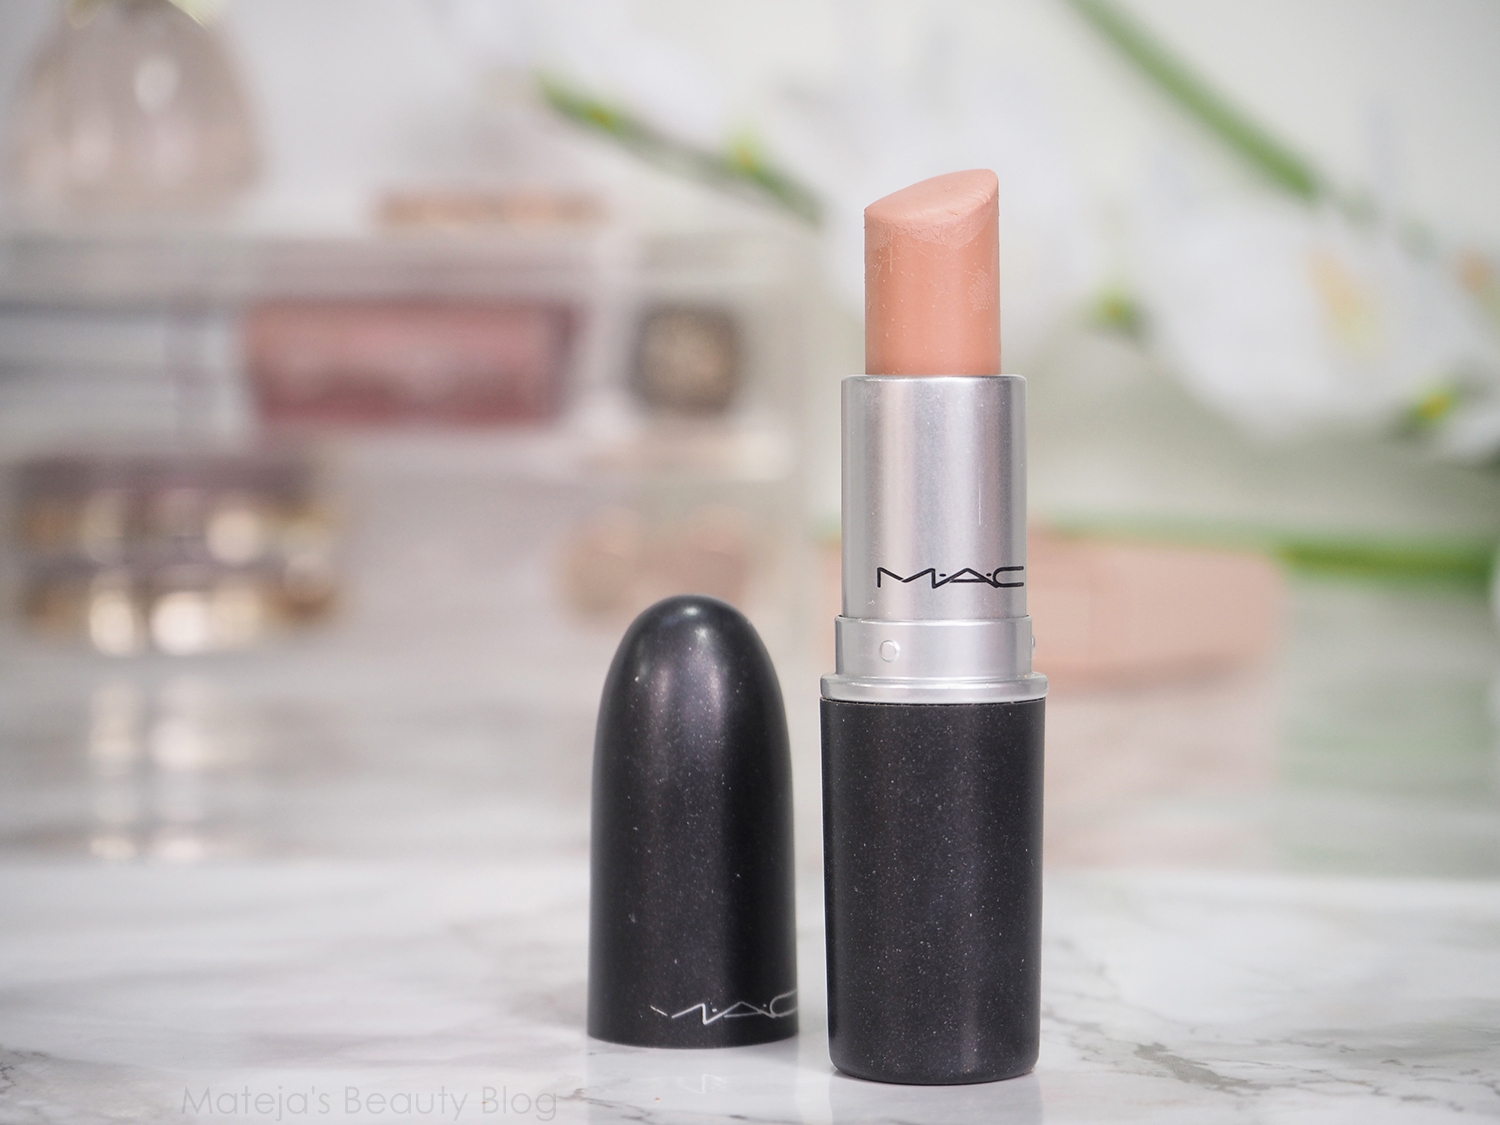 Mac Myth Lipstick - Mateja's Beauty Blog.